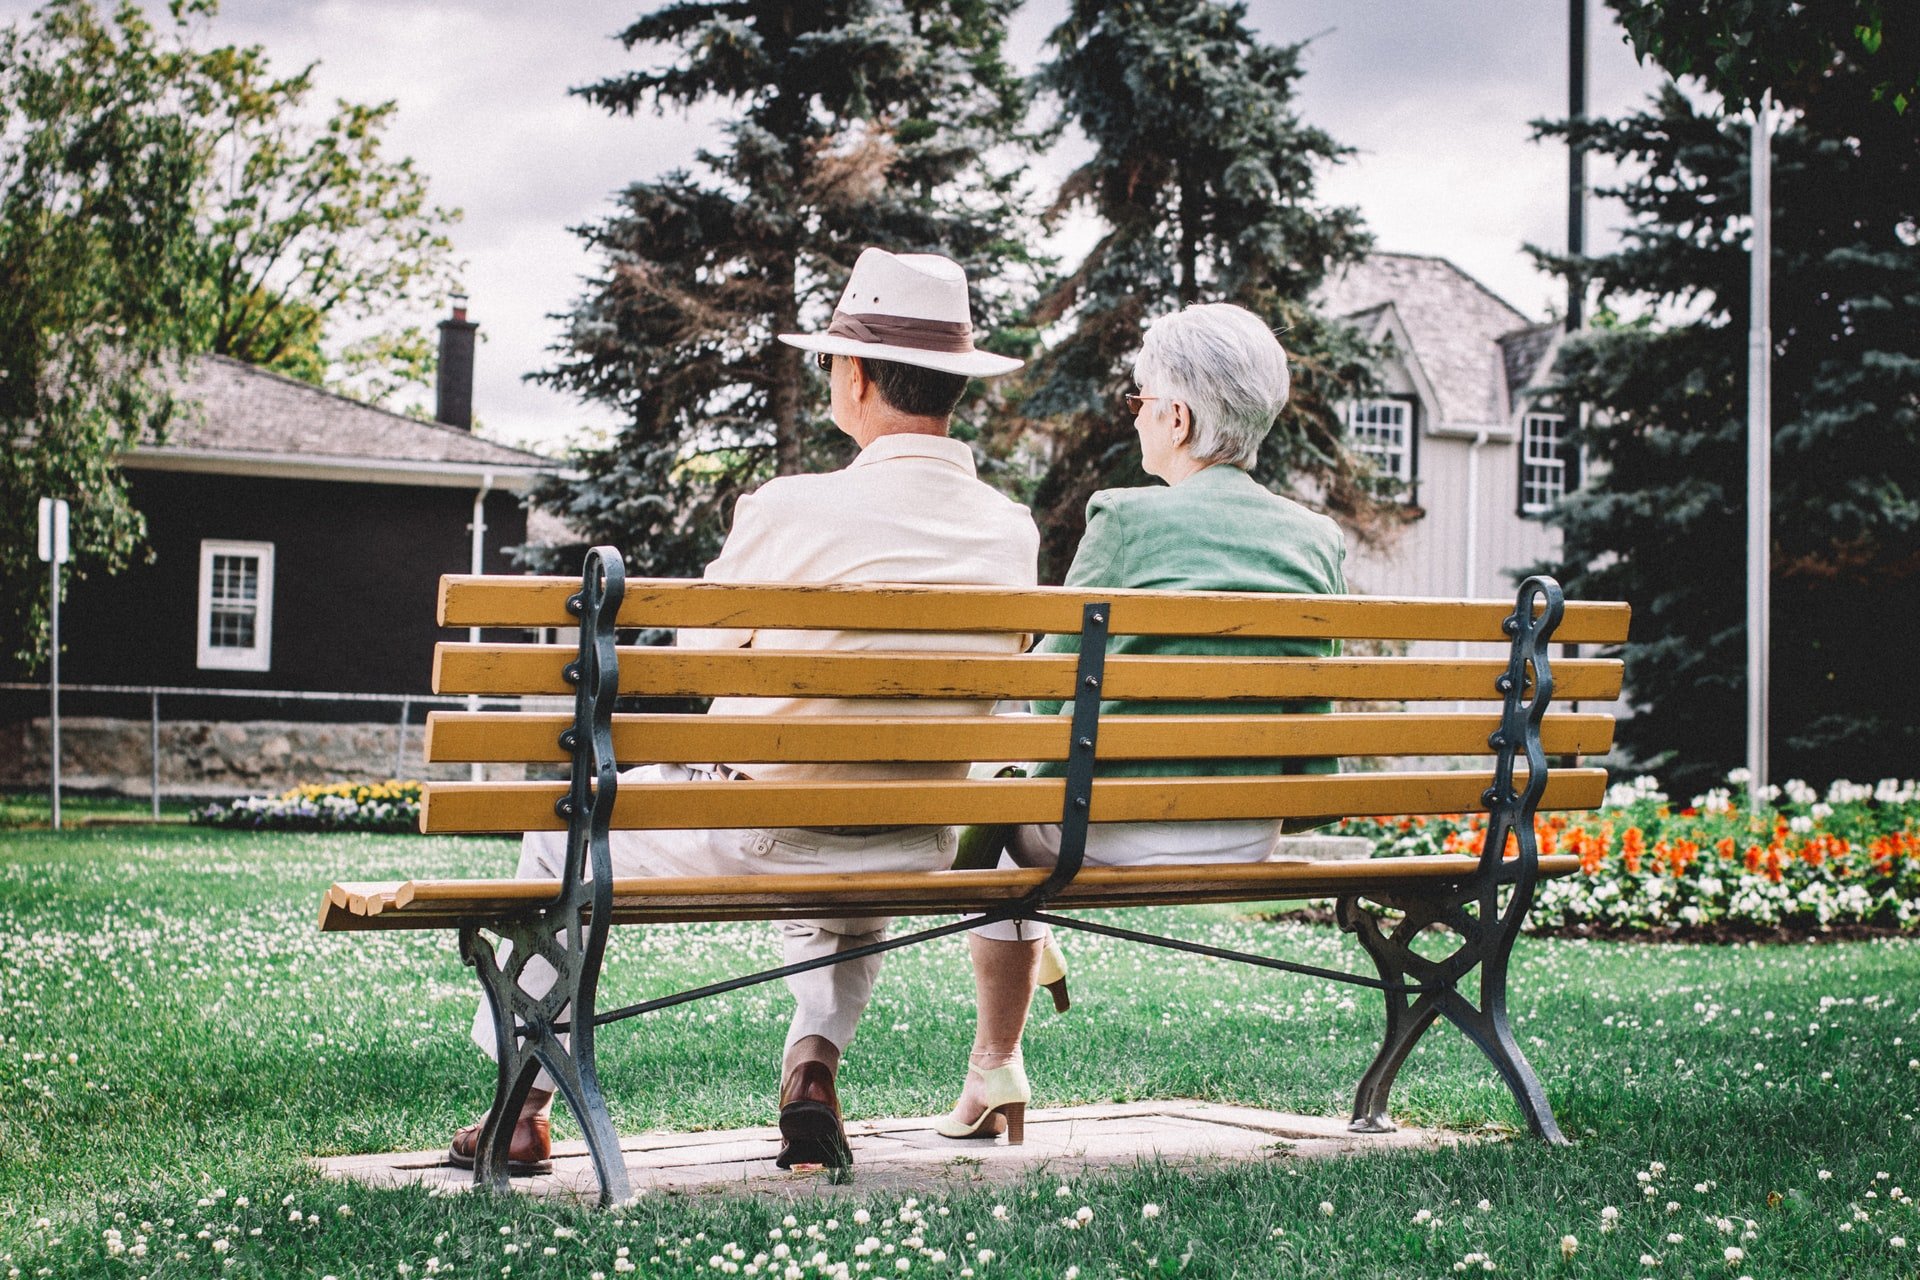 Elderly couple sitting on a bench | Source: Unsplash